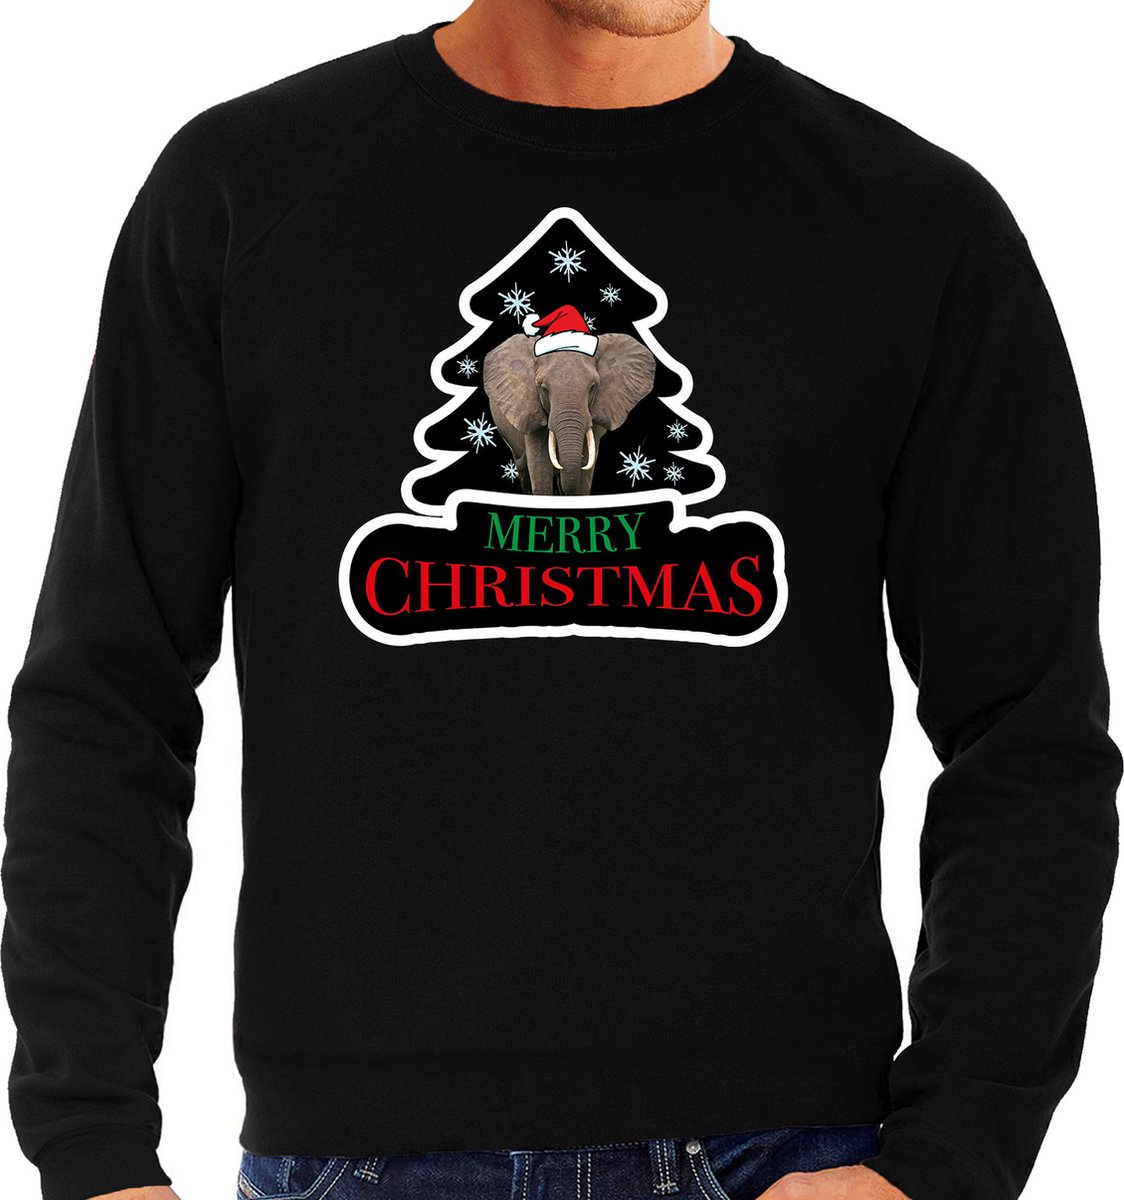 Dieren kersttrui olifant zwart heren - Foute olifanten kerstsweater - Kerst outfit dieren liefhebber XL